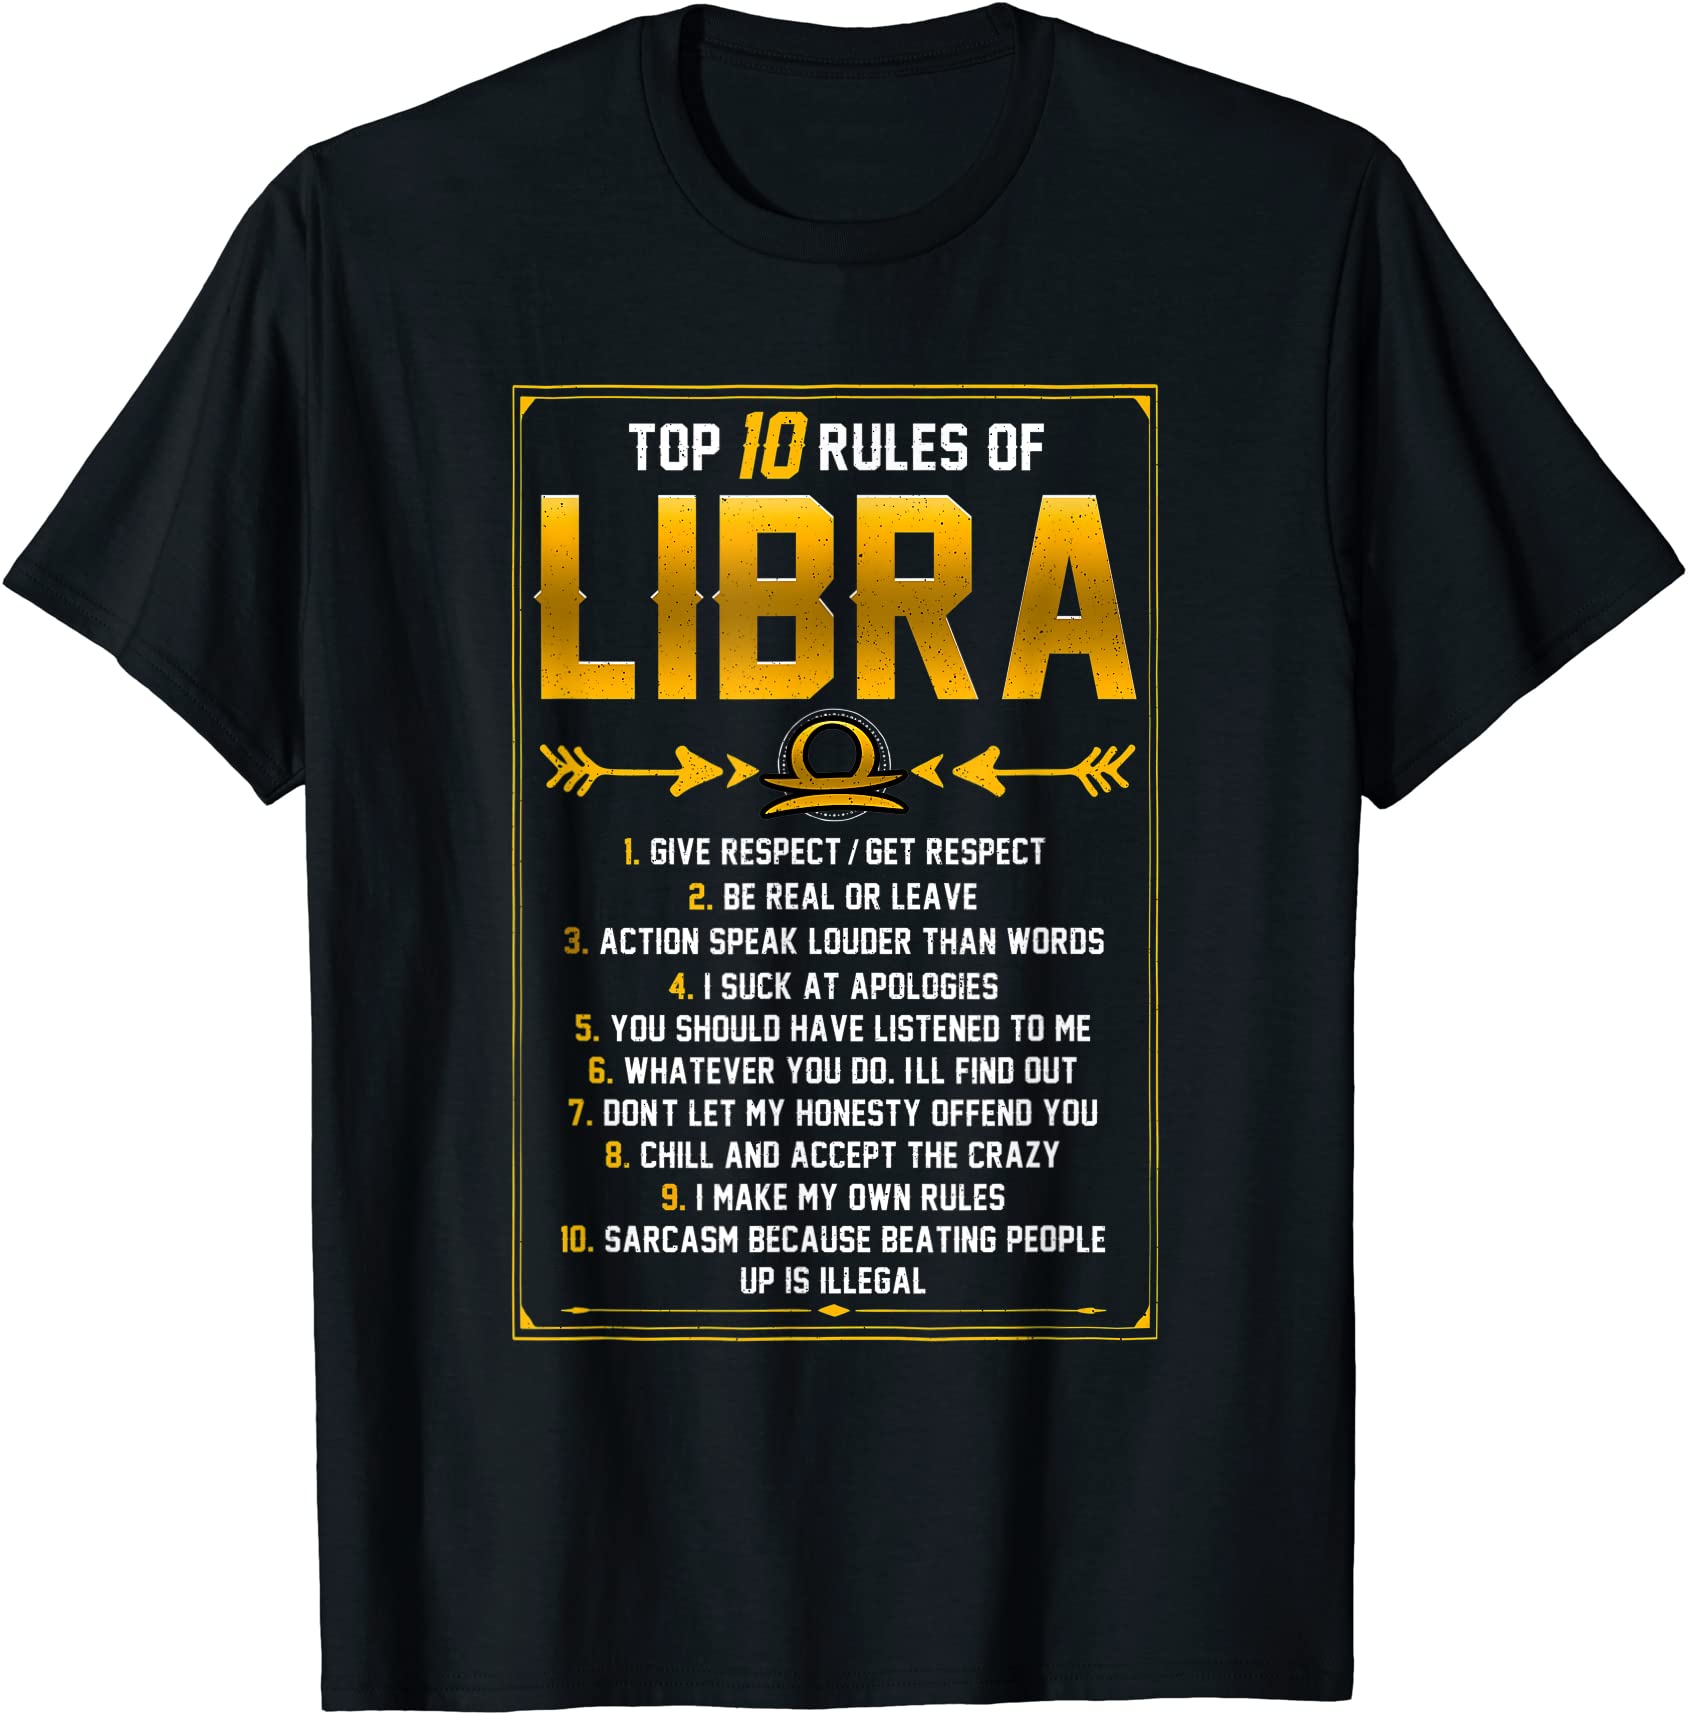 libra horoscope zodiac facts traits rules astrological sign t shirt men ...